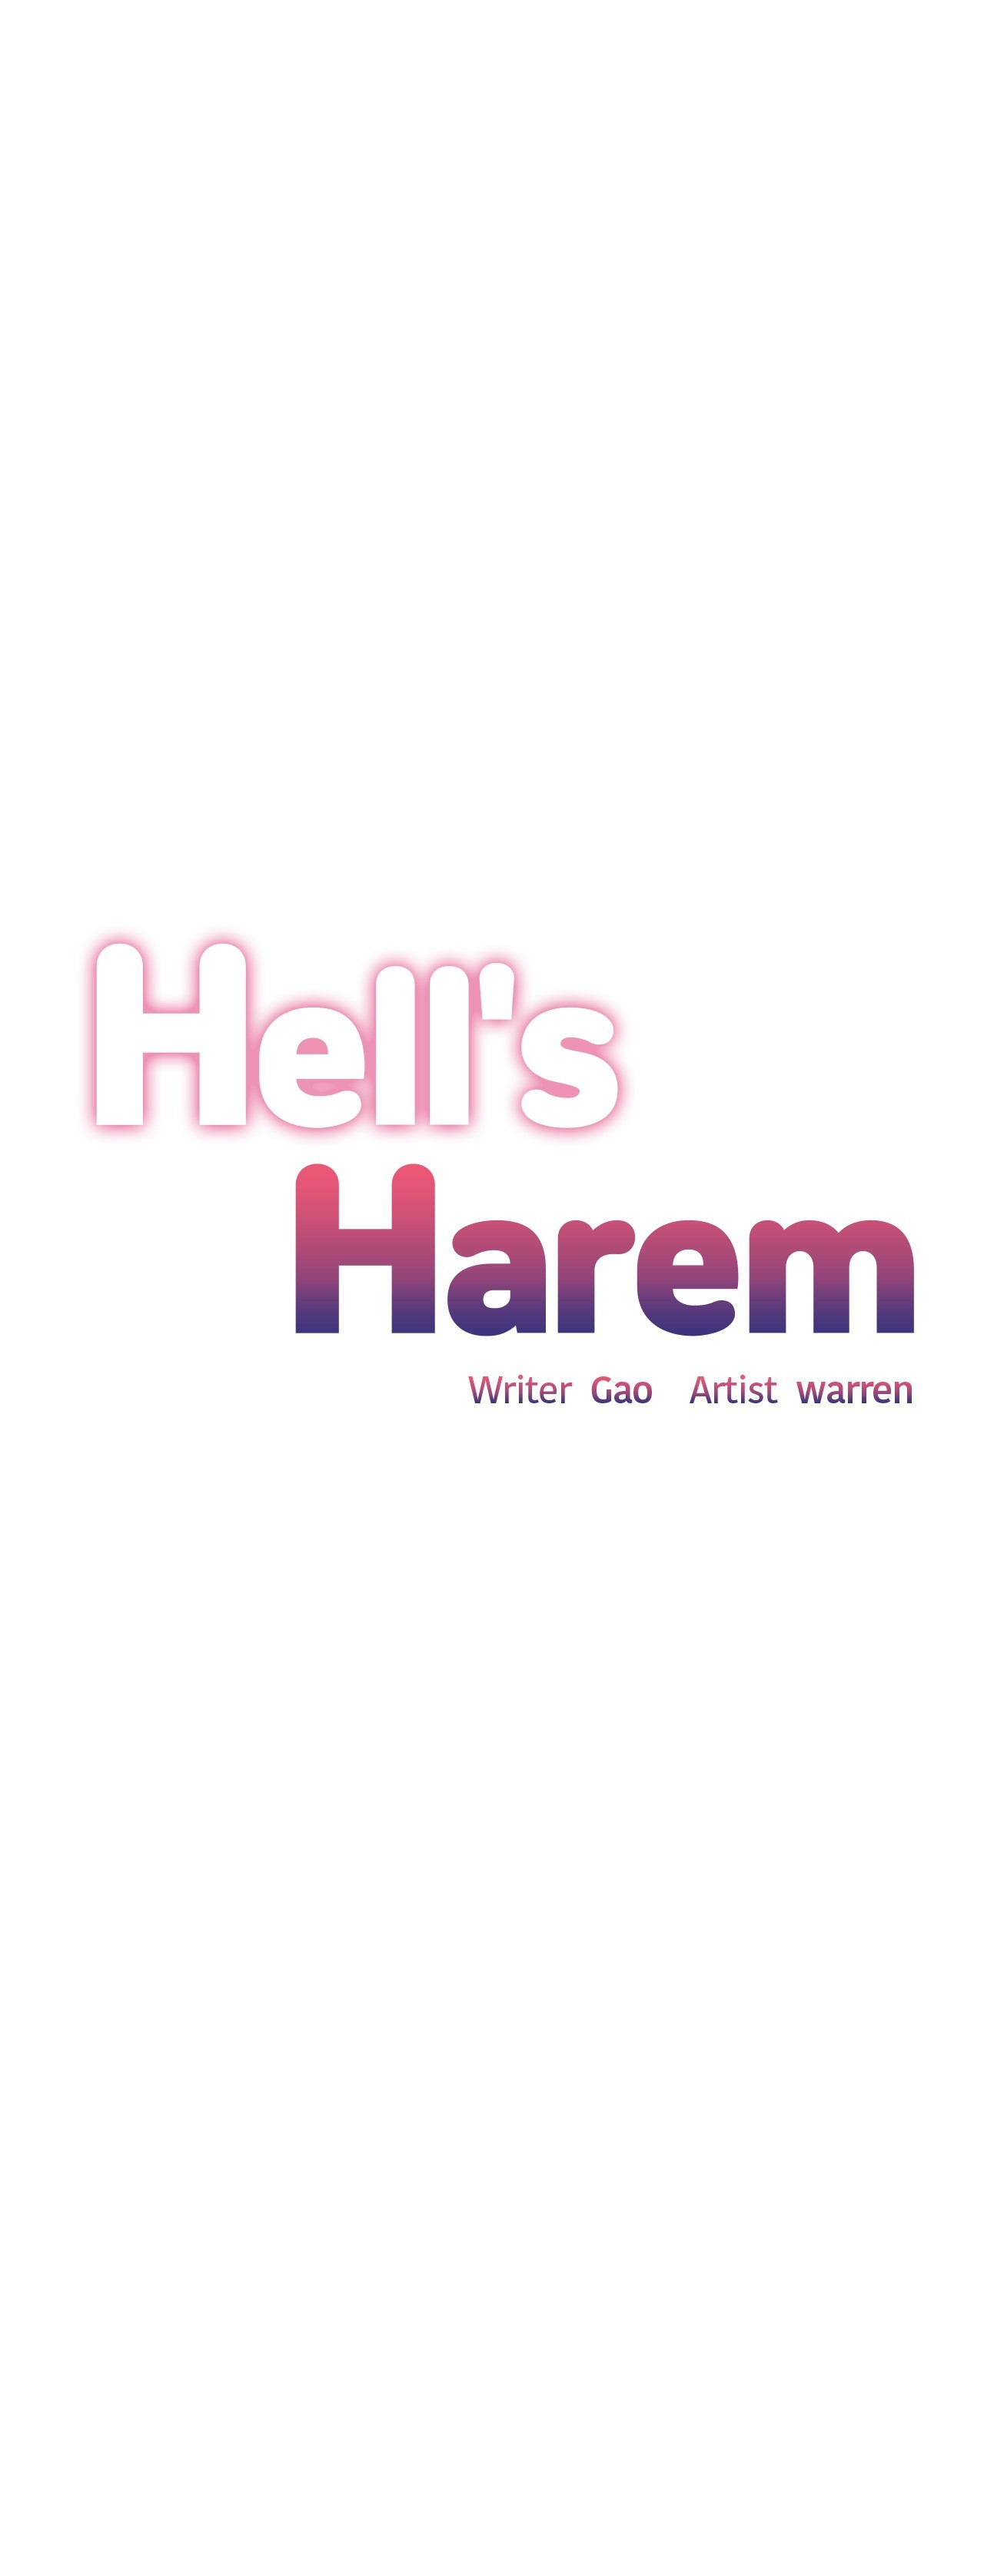 Hell’s Harem image